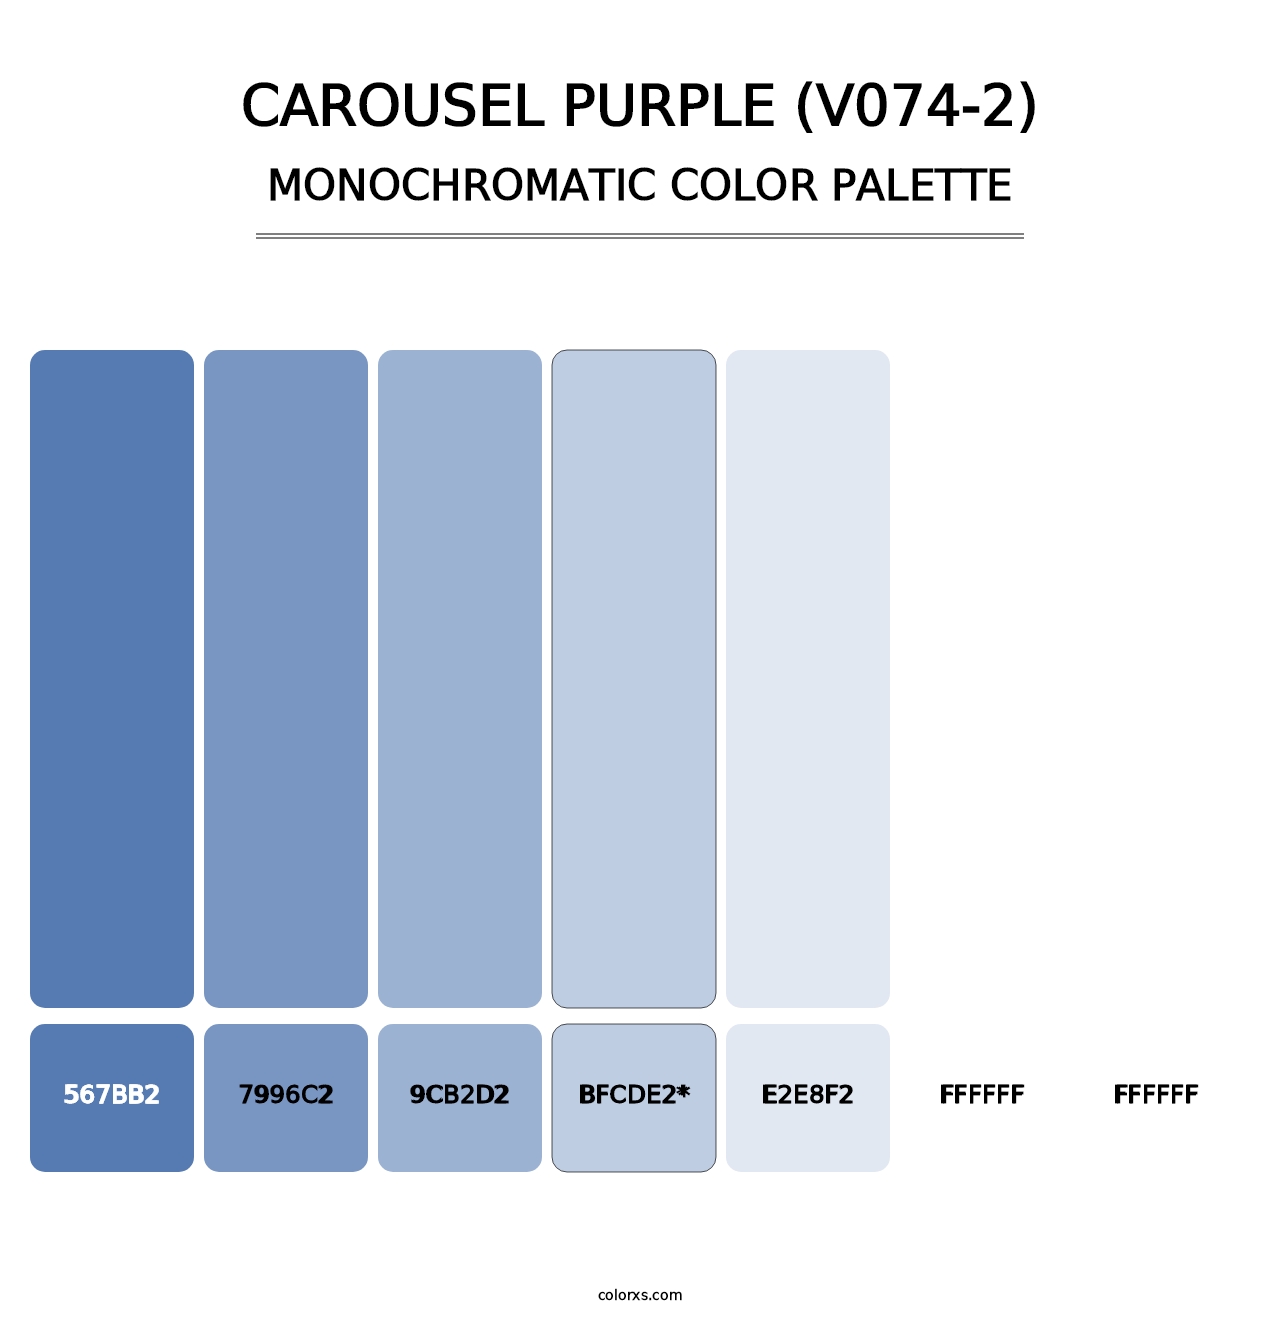 Carousel Purple (V074-2) - Monochromatic Color Palette